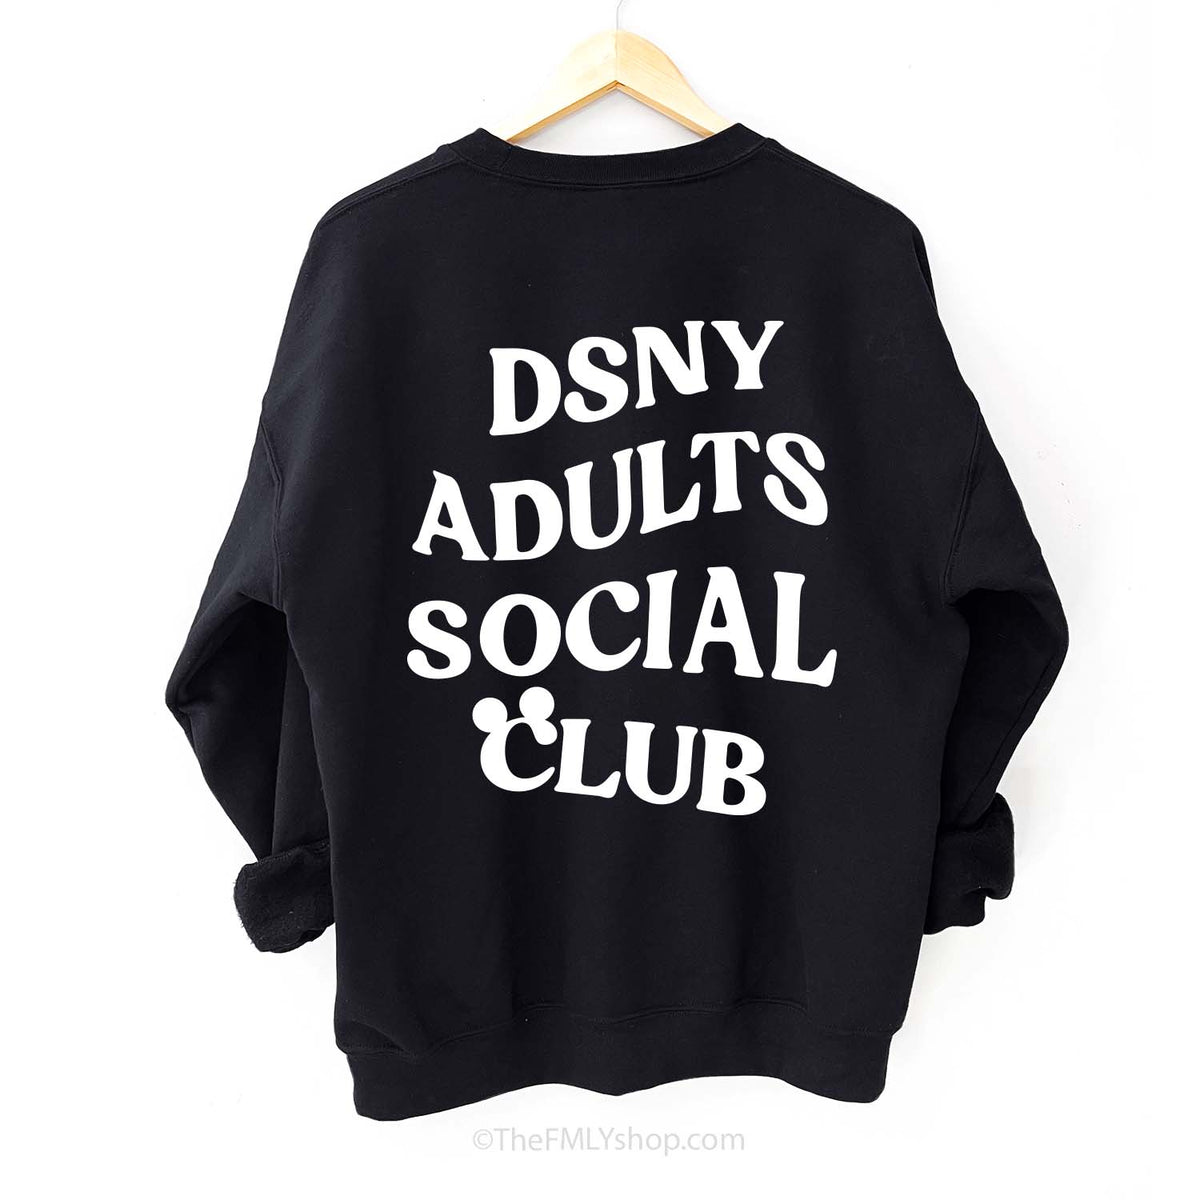 DSNY Adults Social Club Sweatshirt